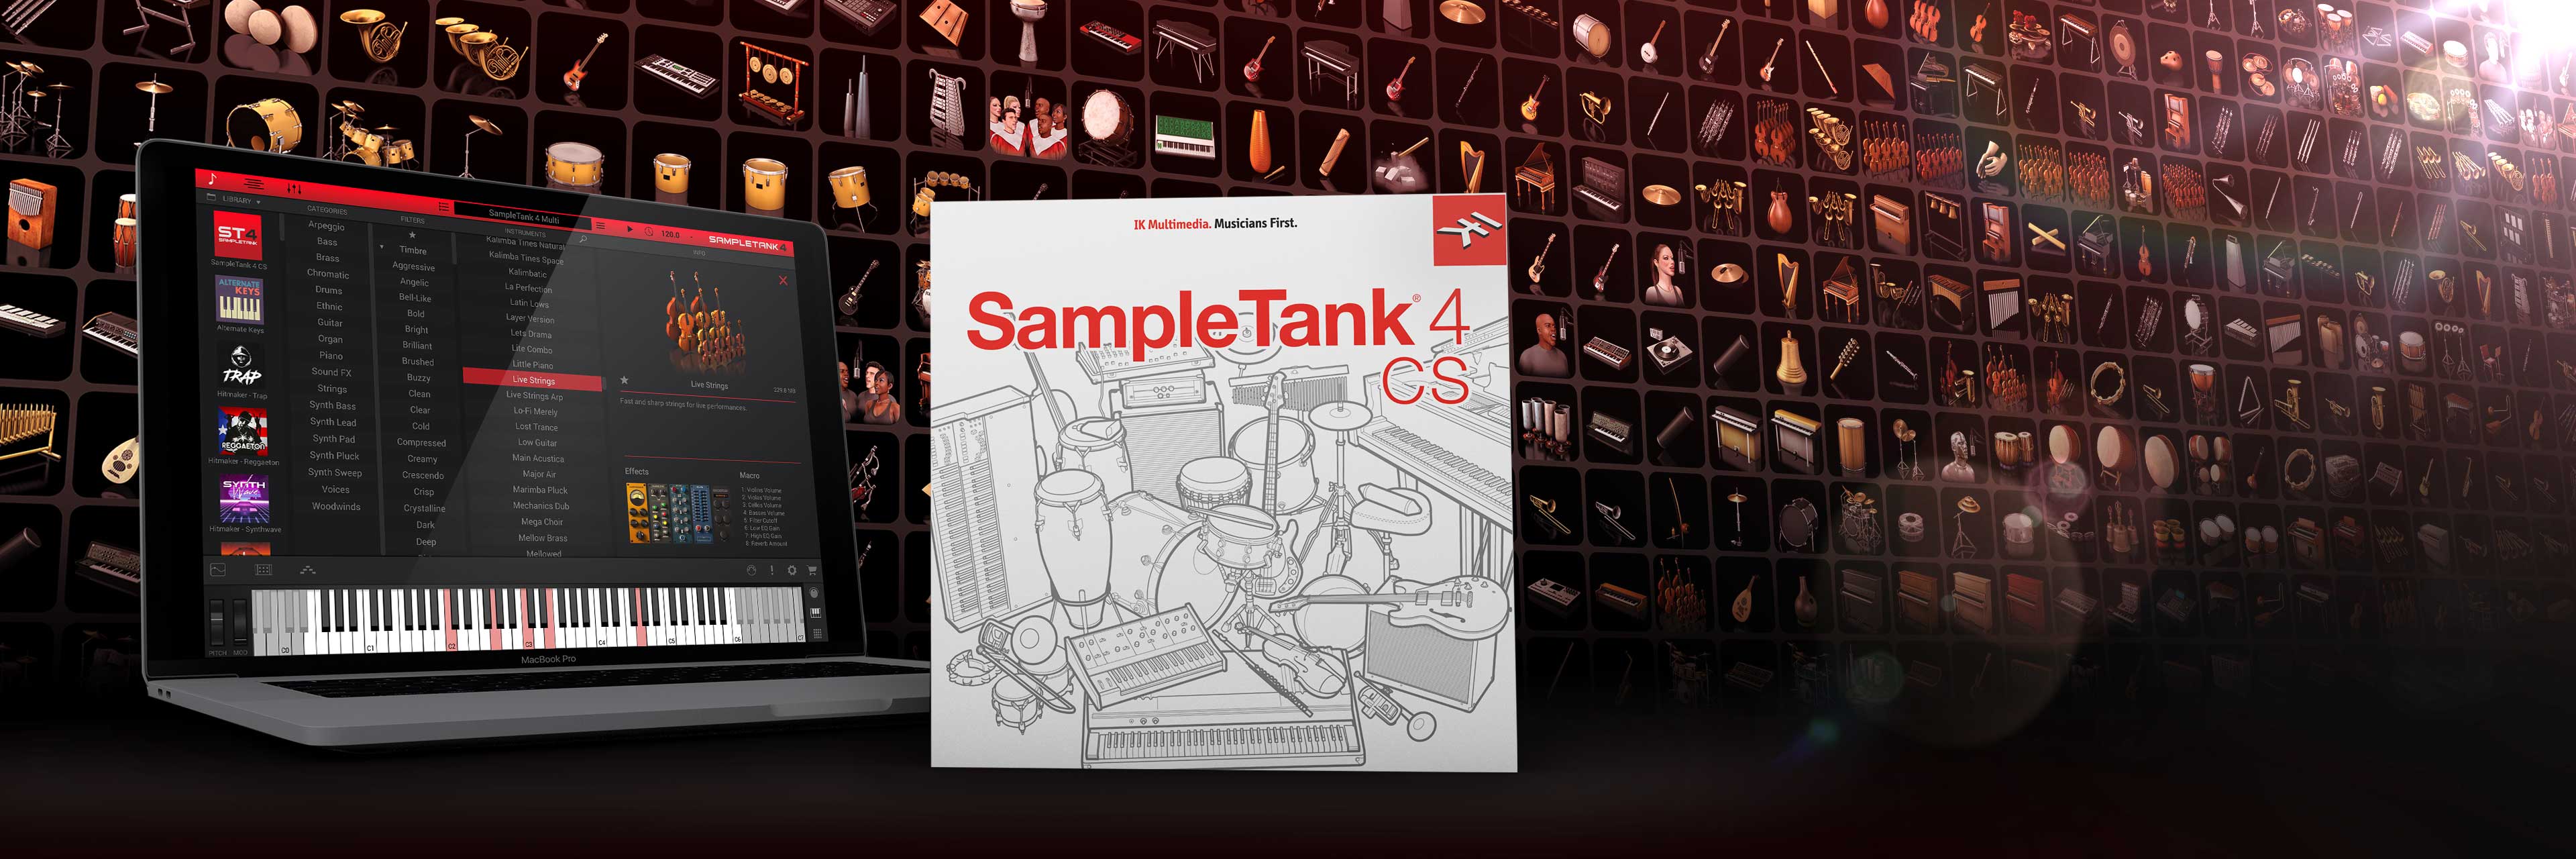 sampletank custom shop free serial number